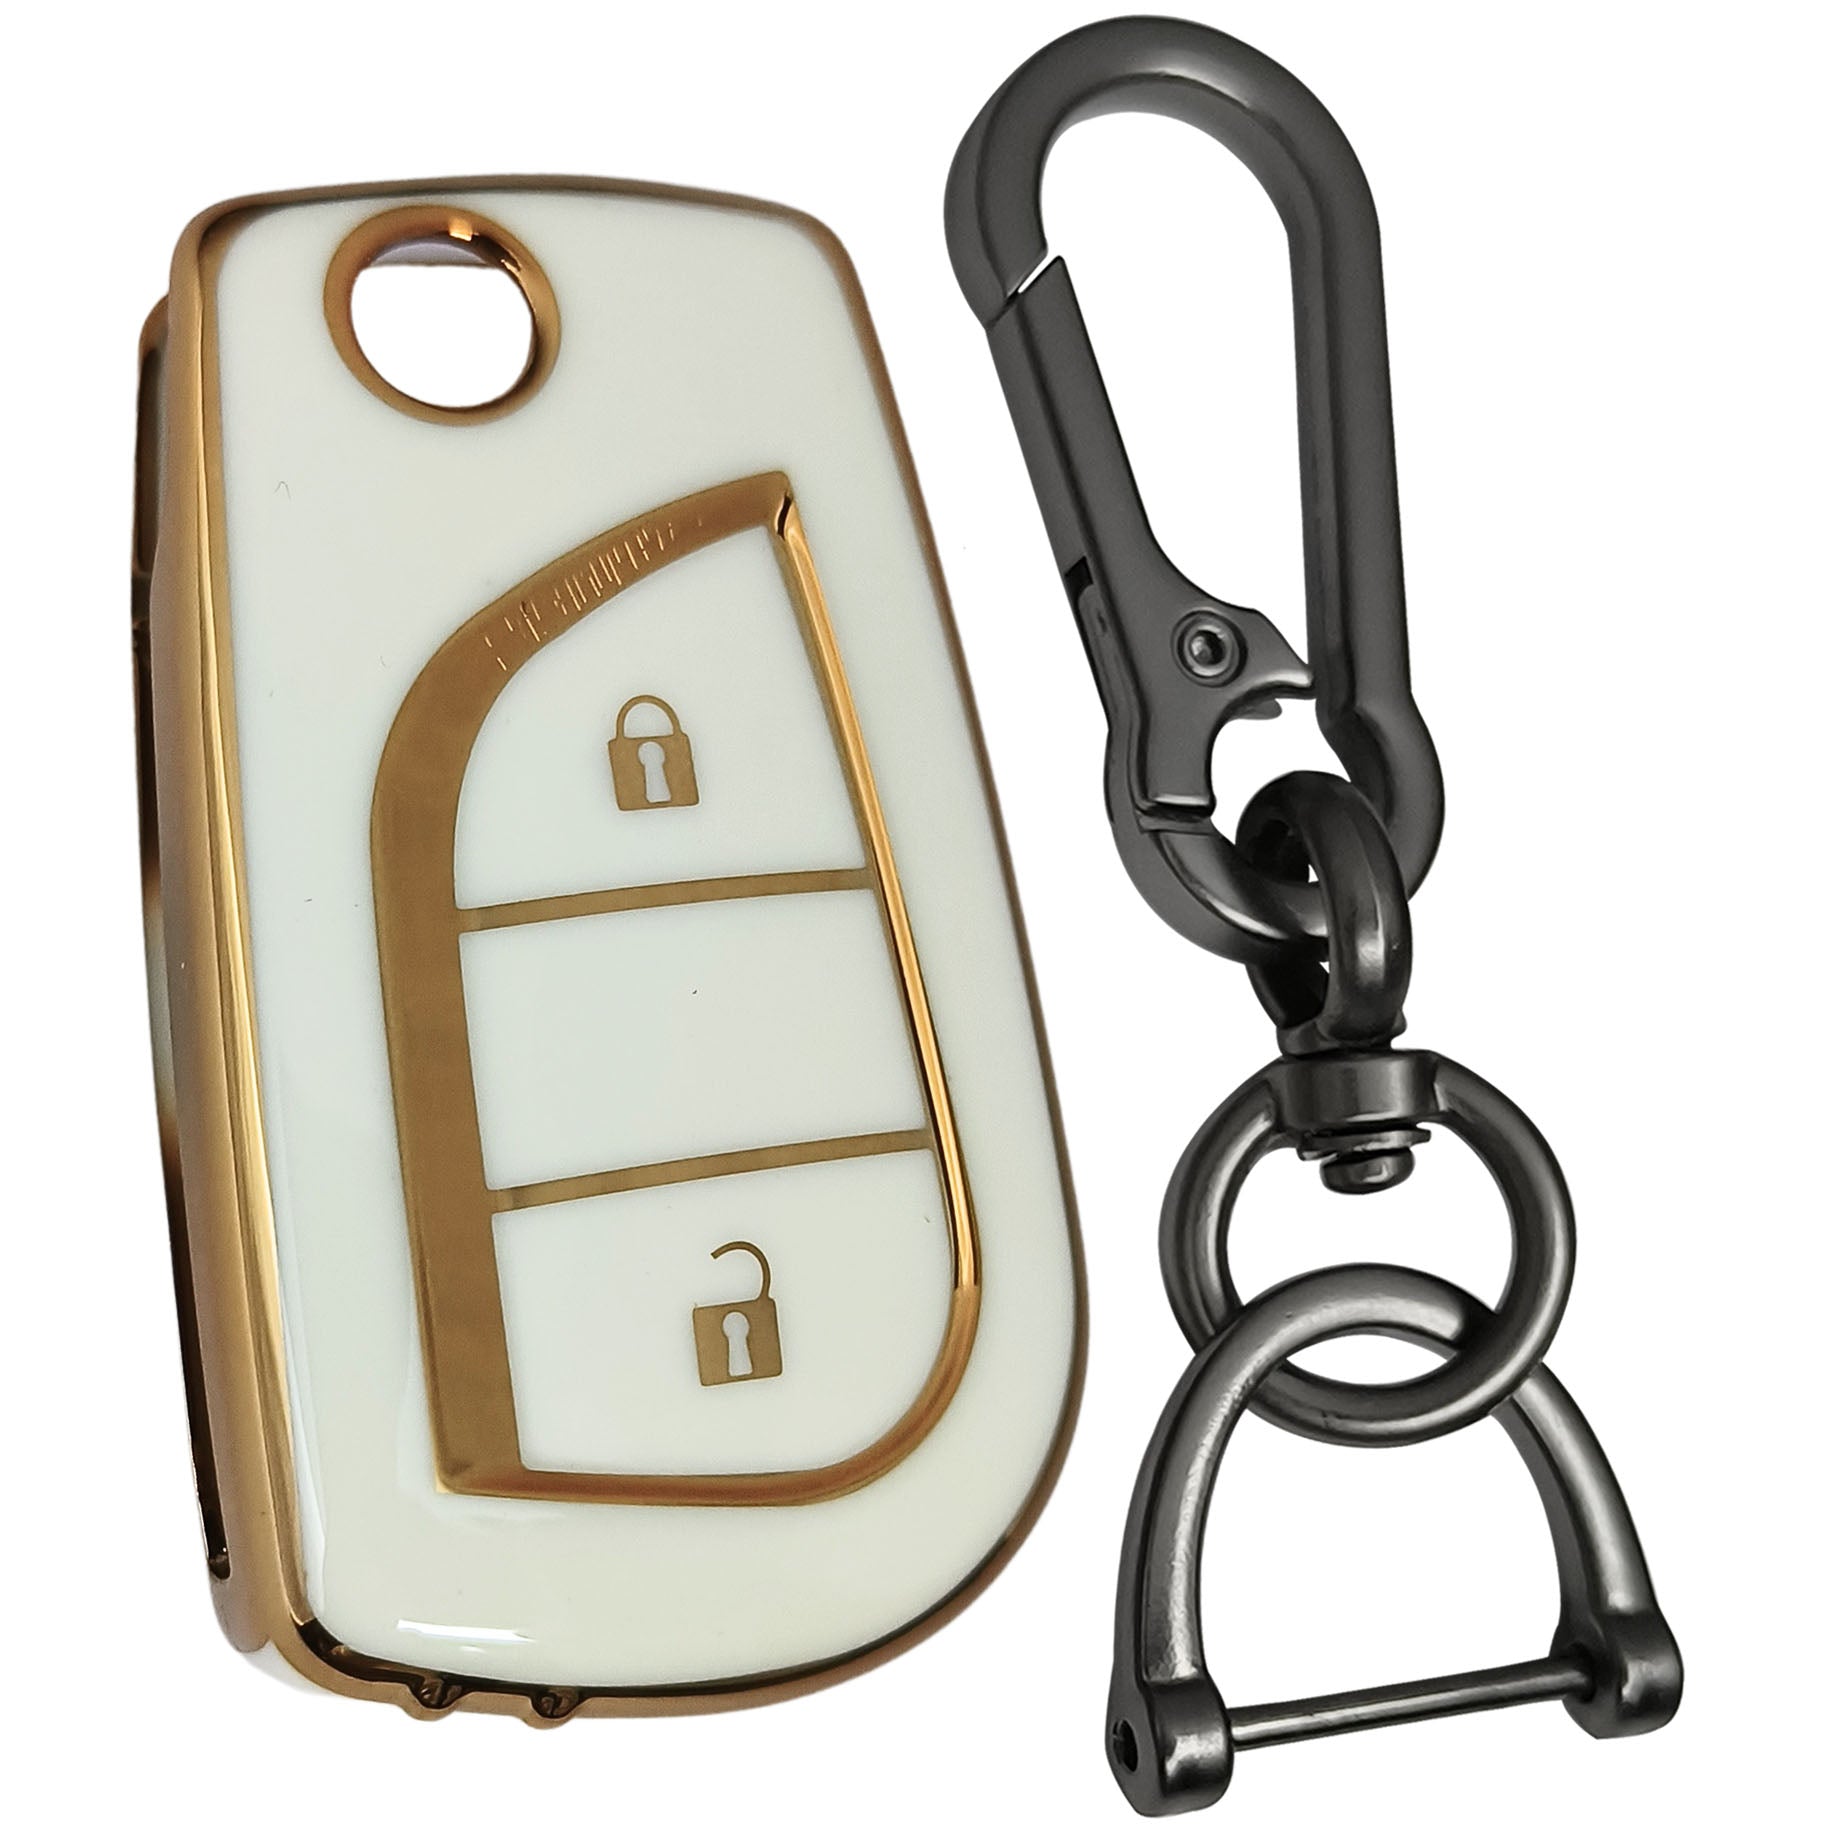 toyota corolla innova crysta 2 button flip tpu white gold key cover case accessories keychain